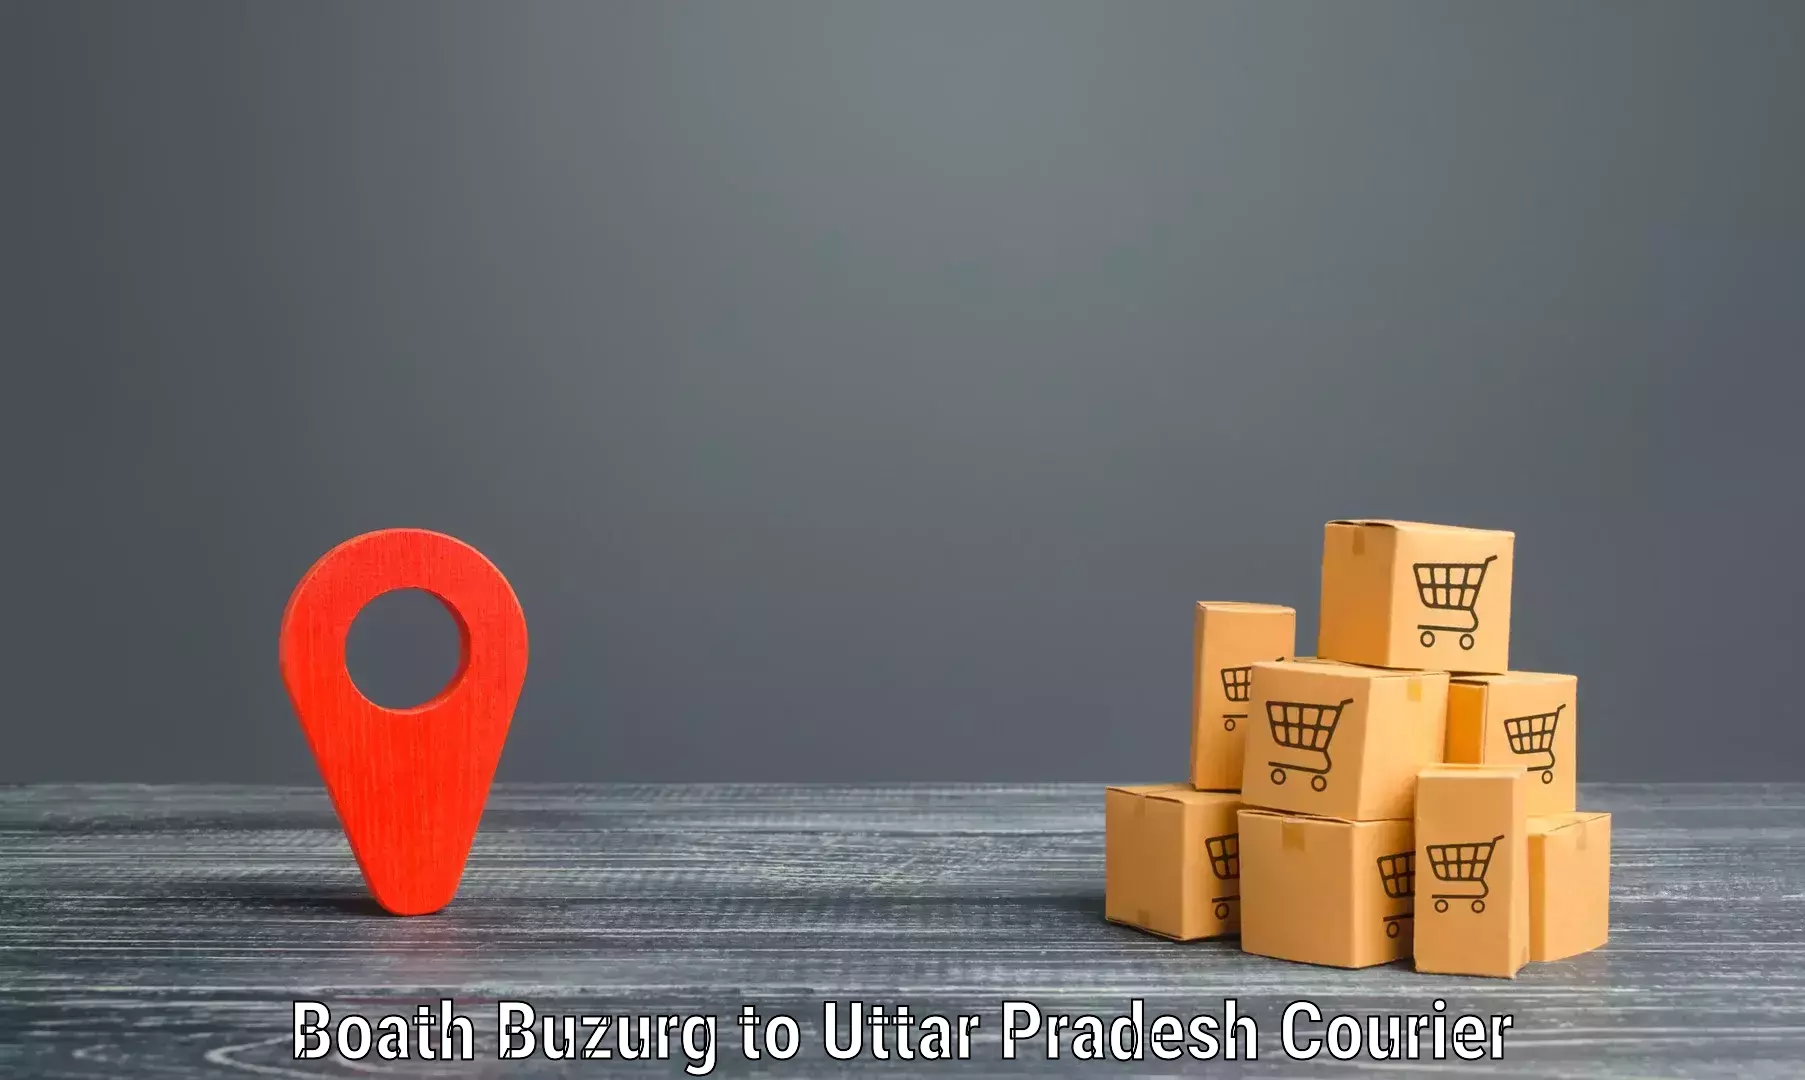 Express logistics service Boath Buzurg to Uttar Pradesh